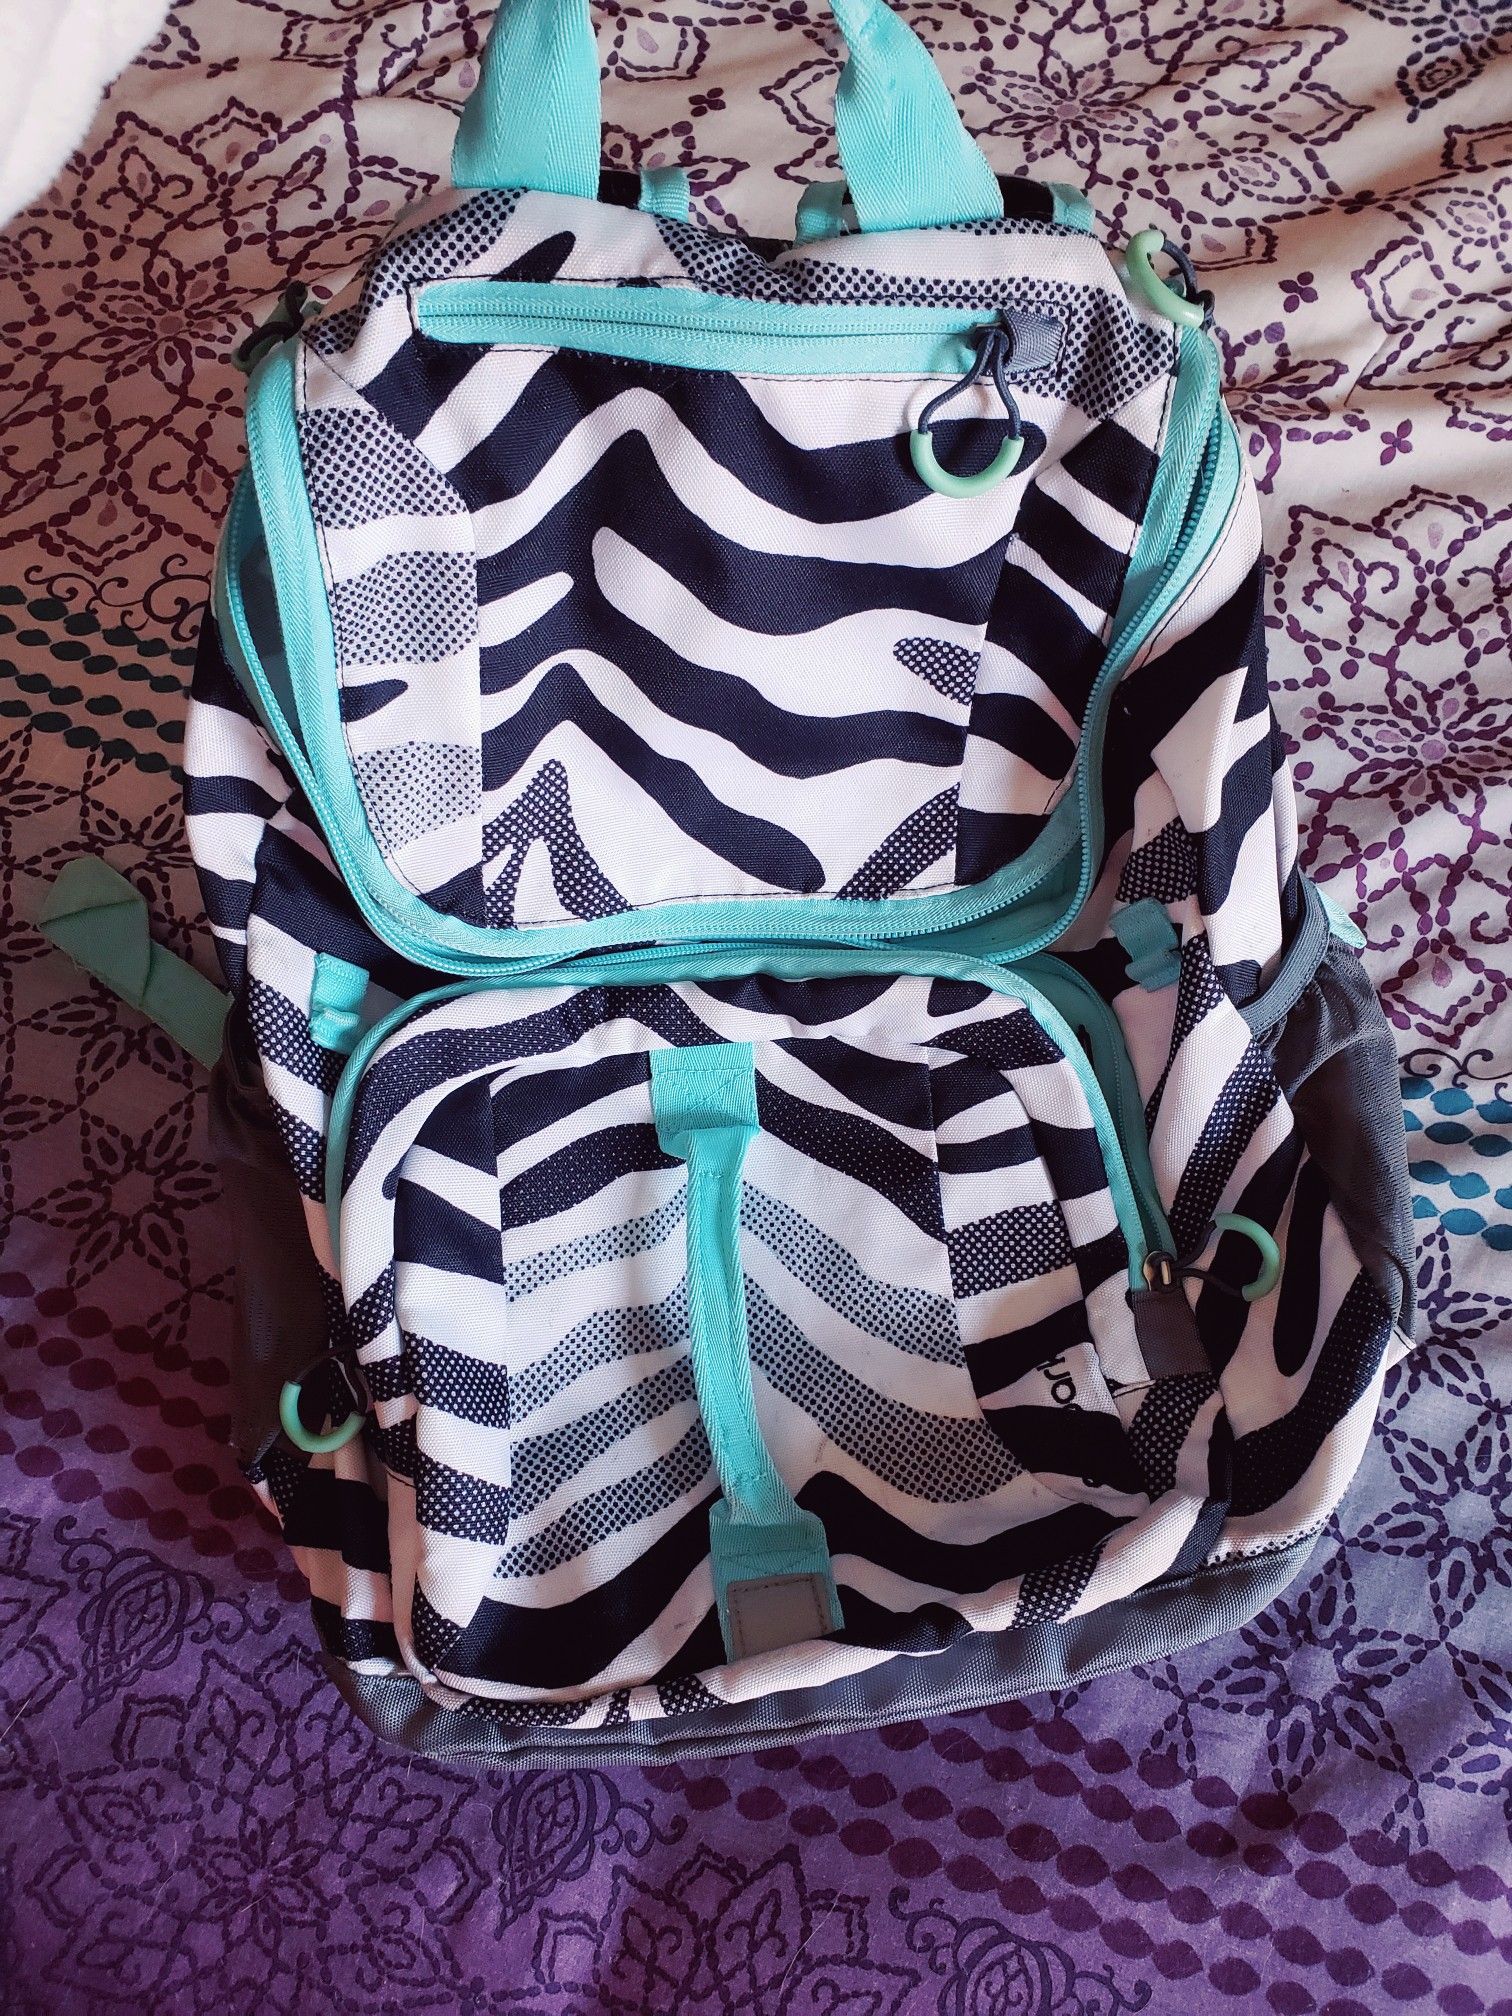 Zebra Print Backpack with Teal Trim & Interior